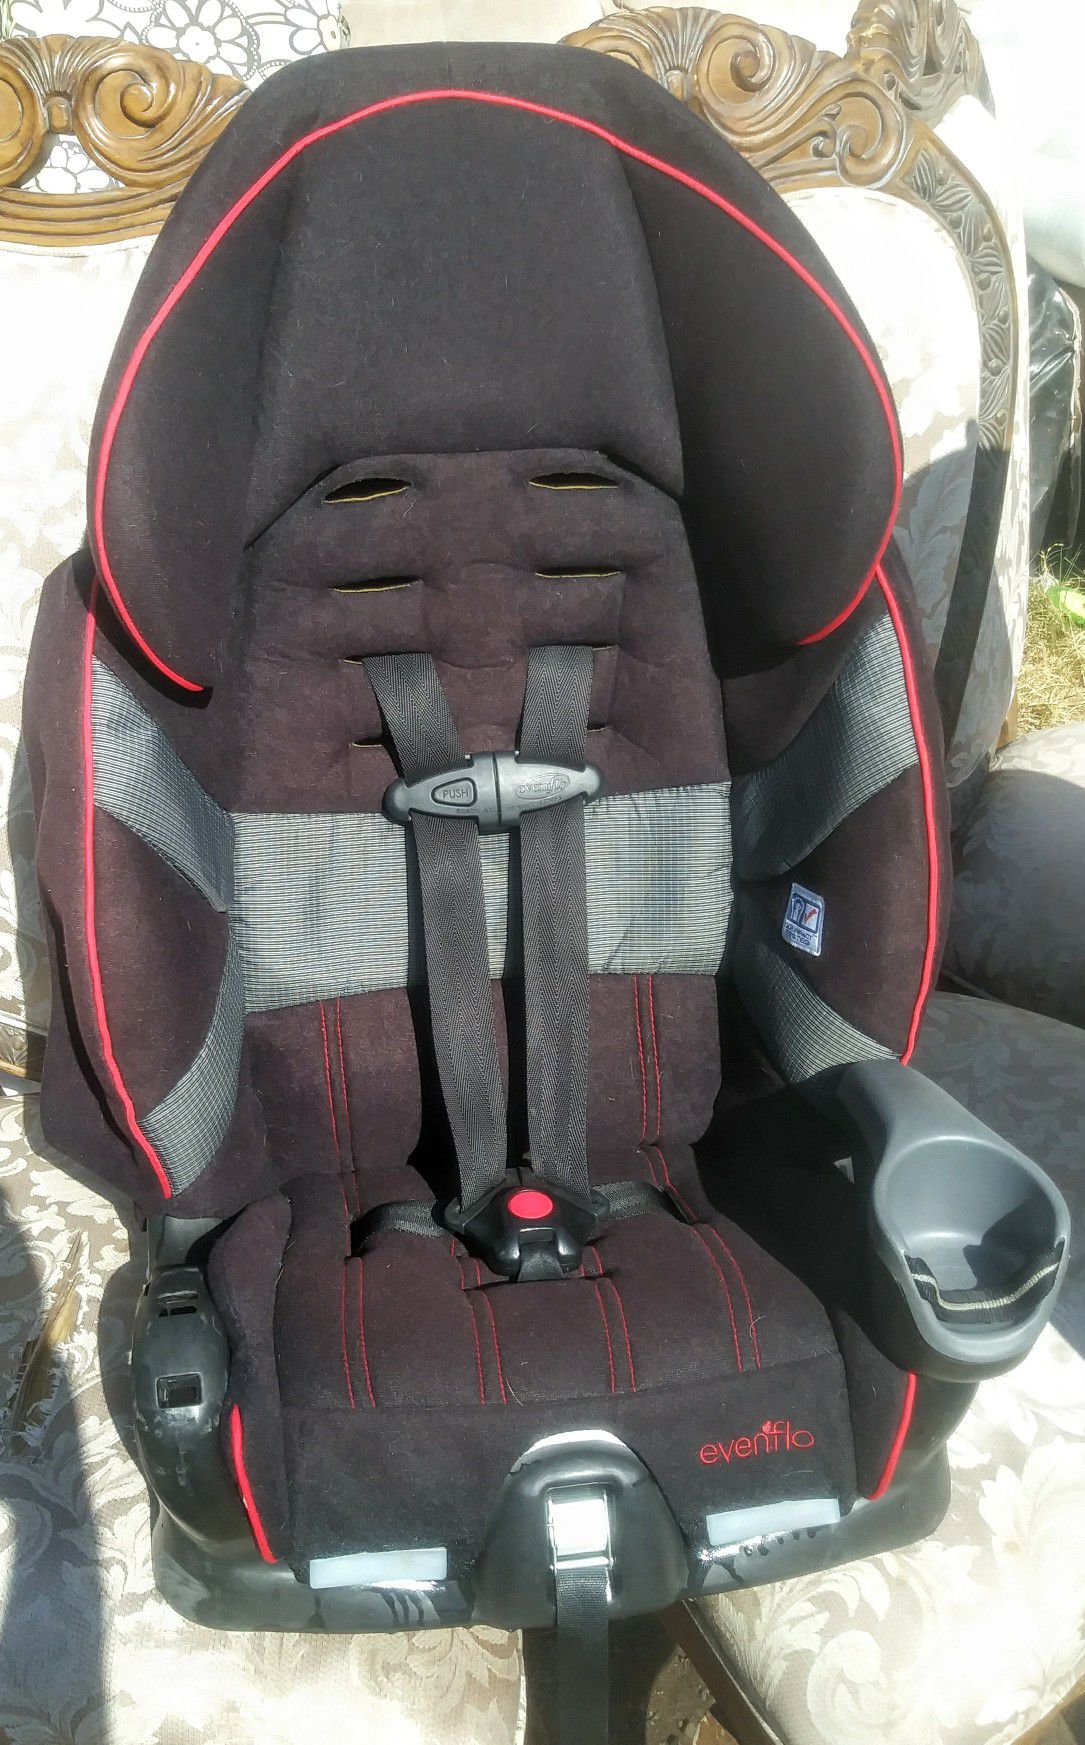 (Black, gray, red trim) graco car seat